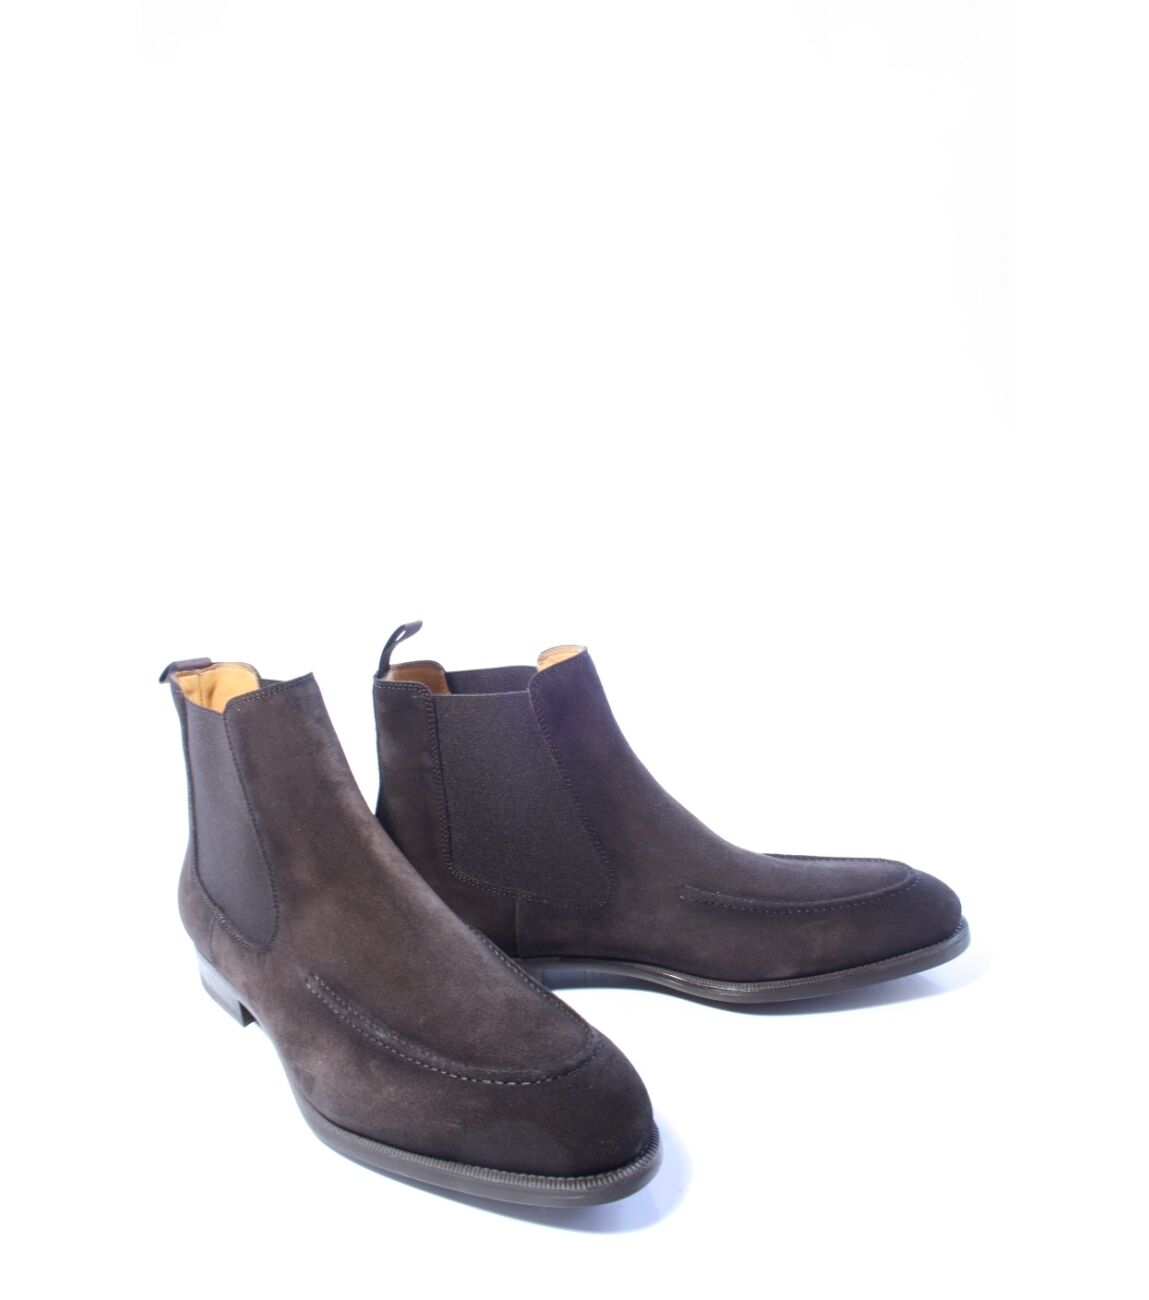 Magnanni Heren boots gekleed bruin 43.5